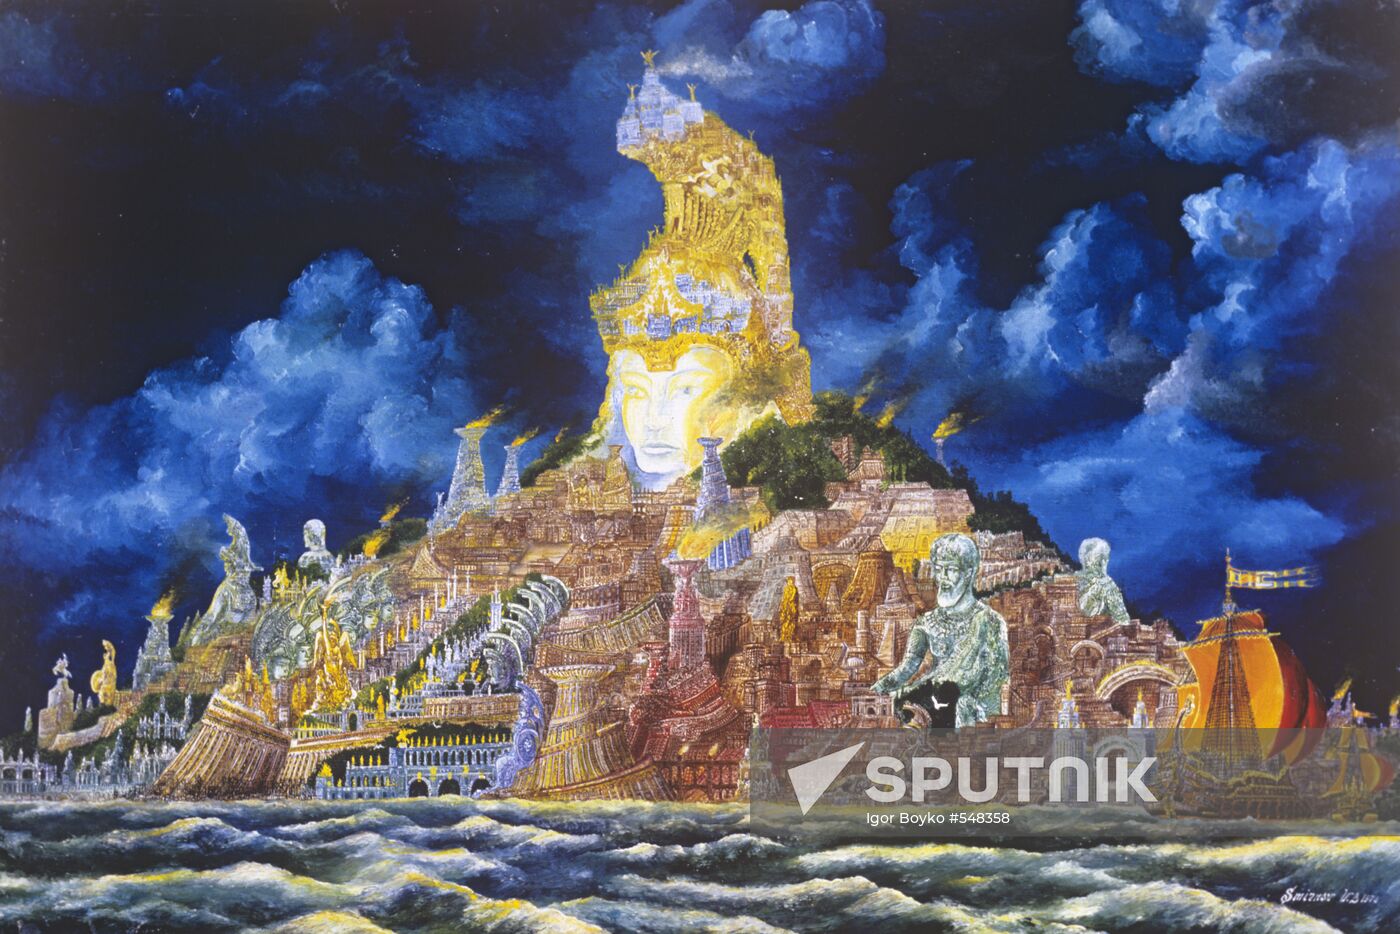 Reproduction of "Atlantis" painting